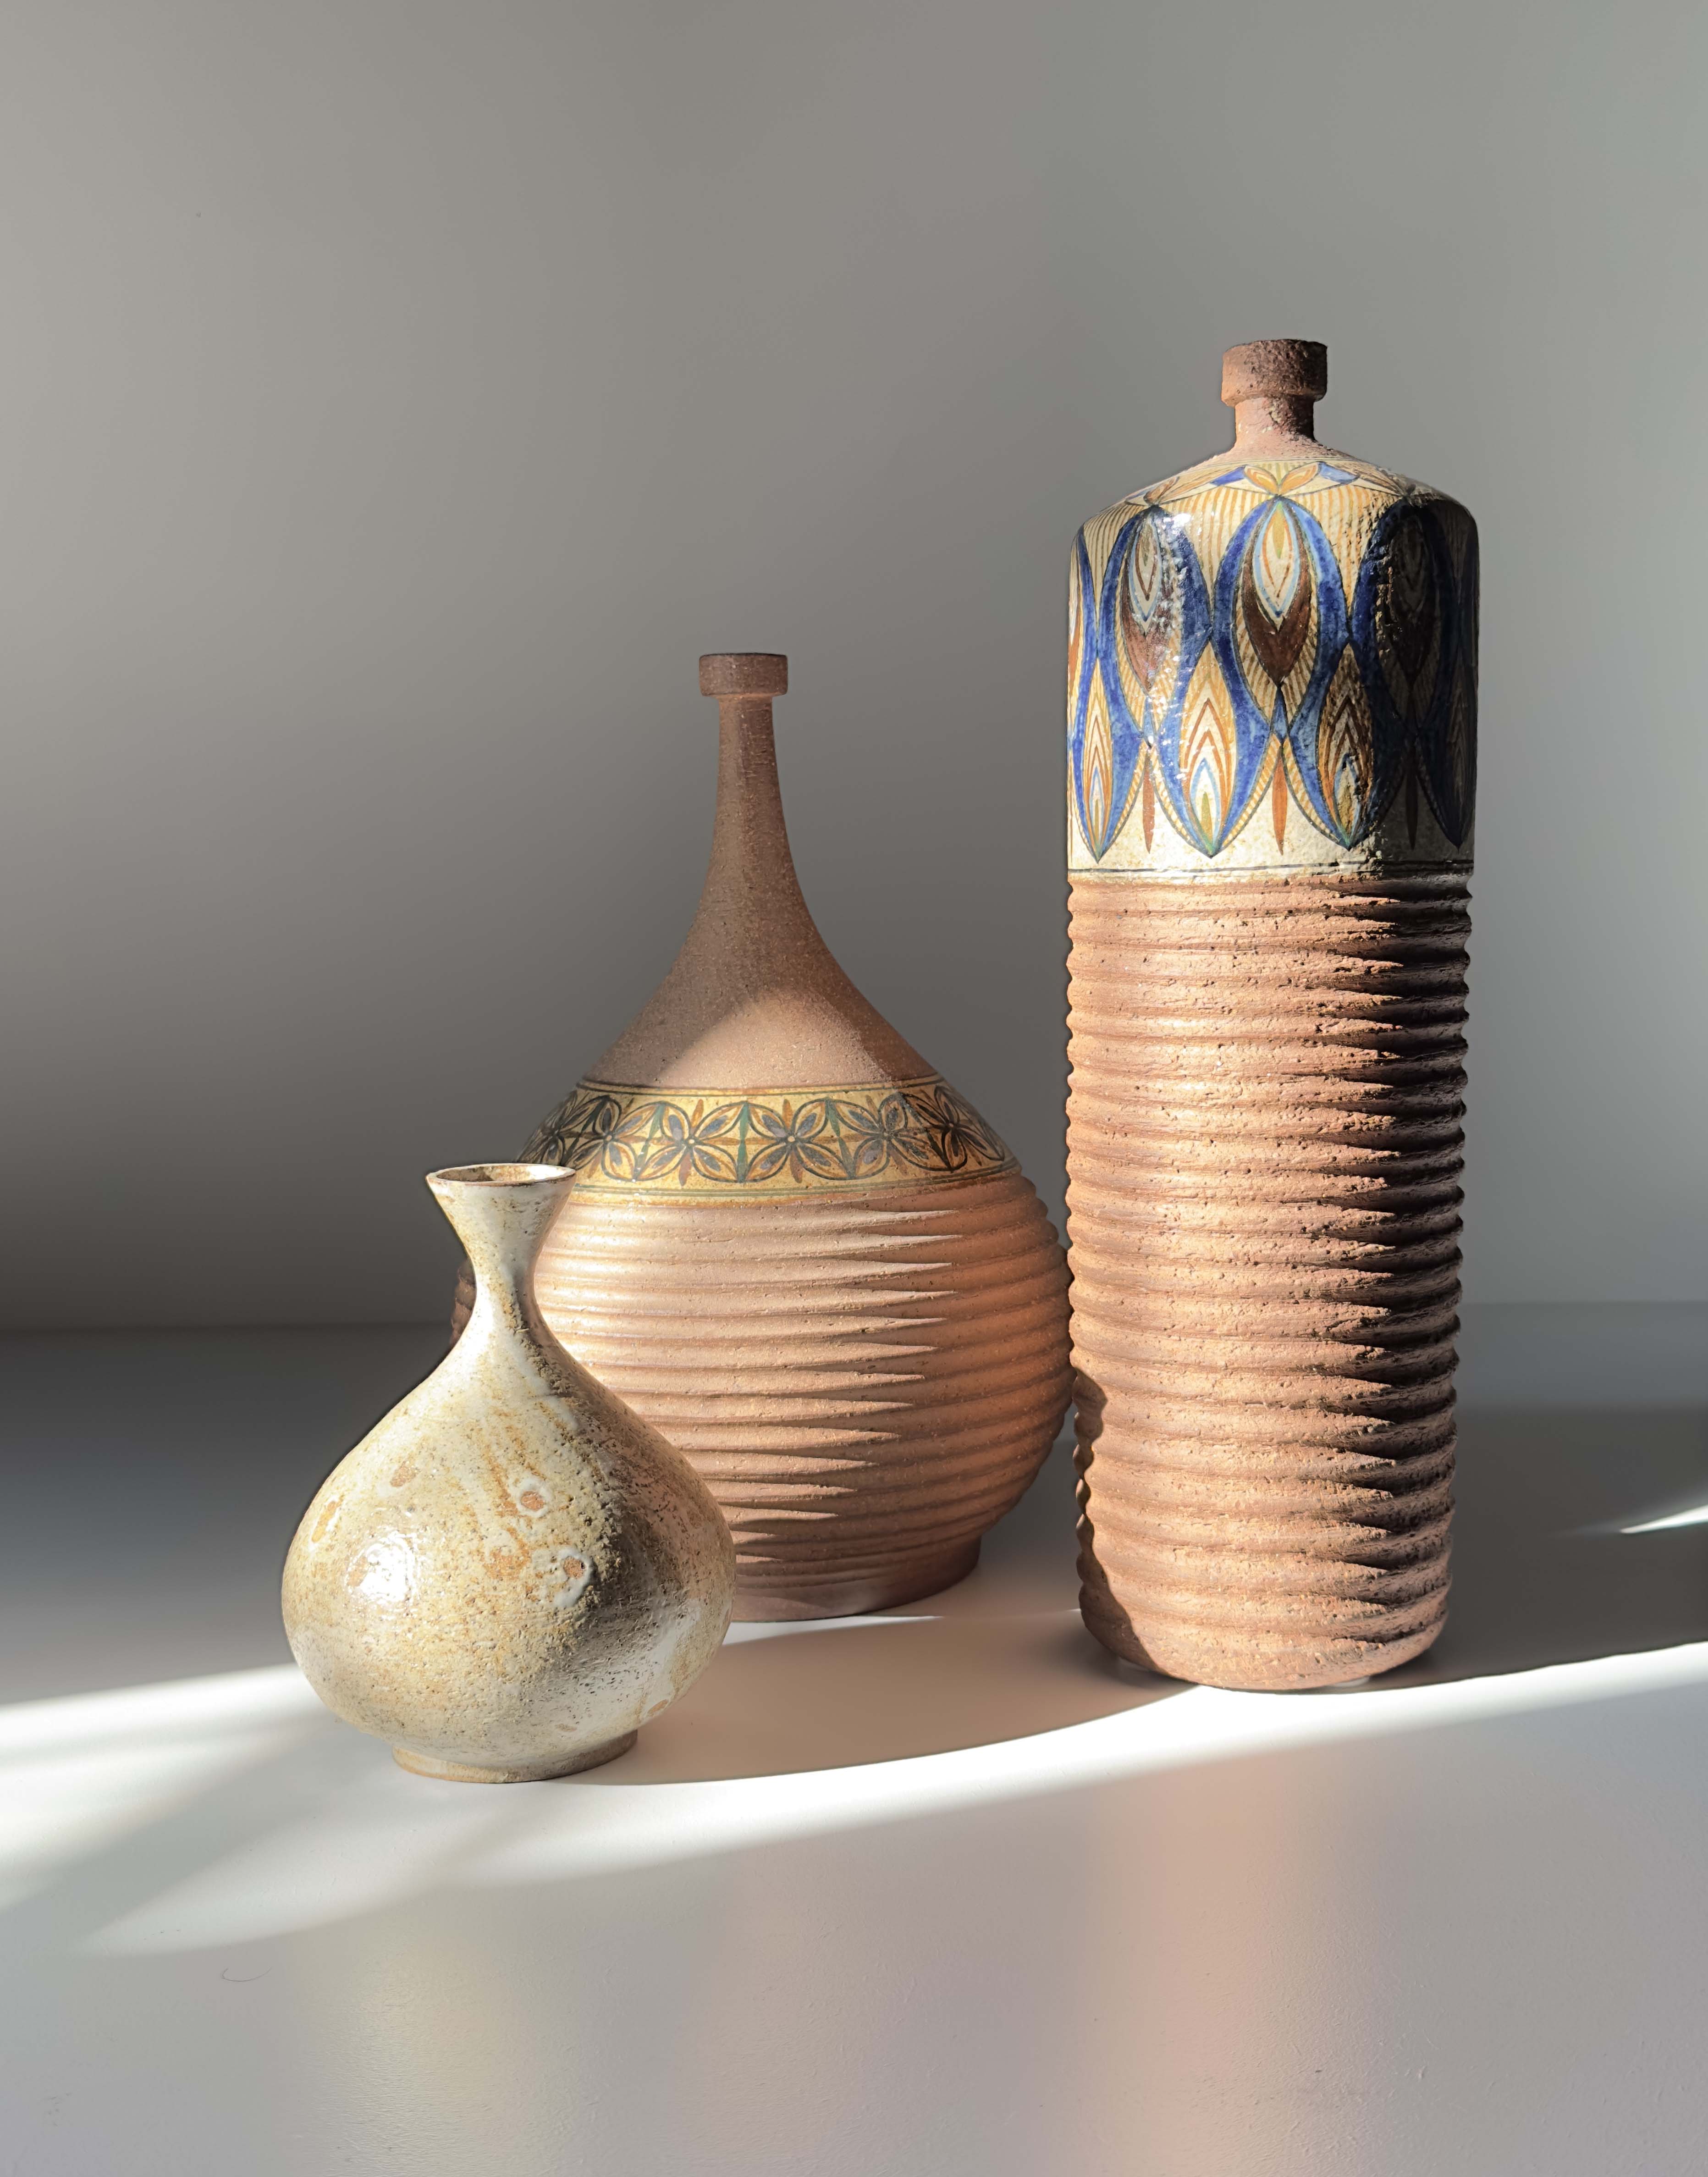 Madrid design festival pottery exhibition